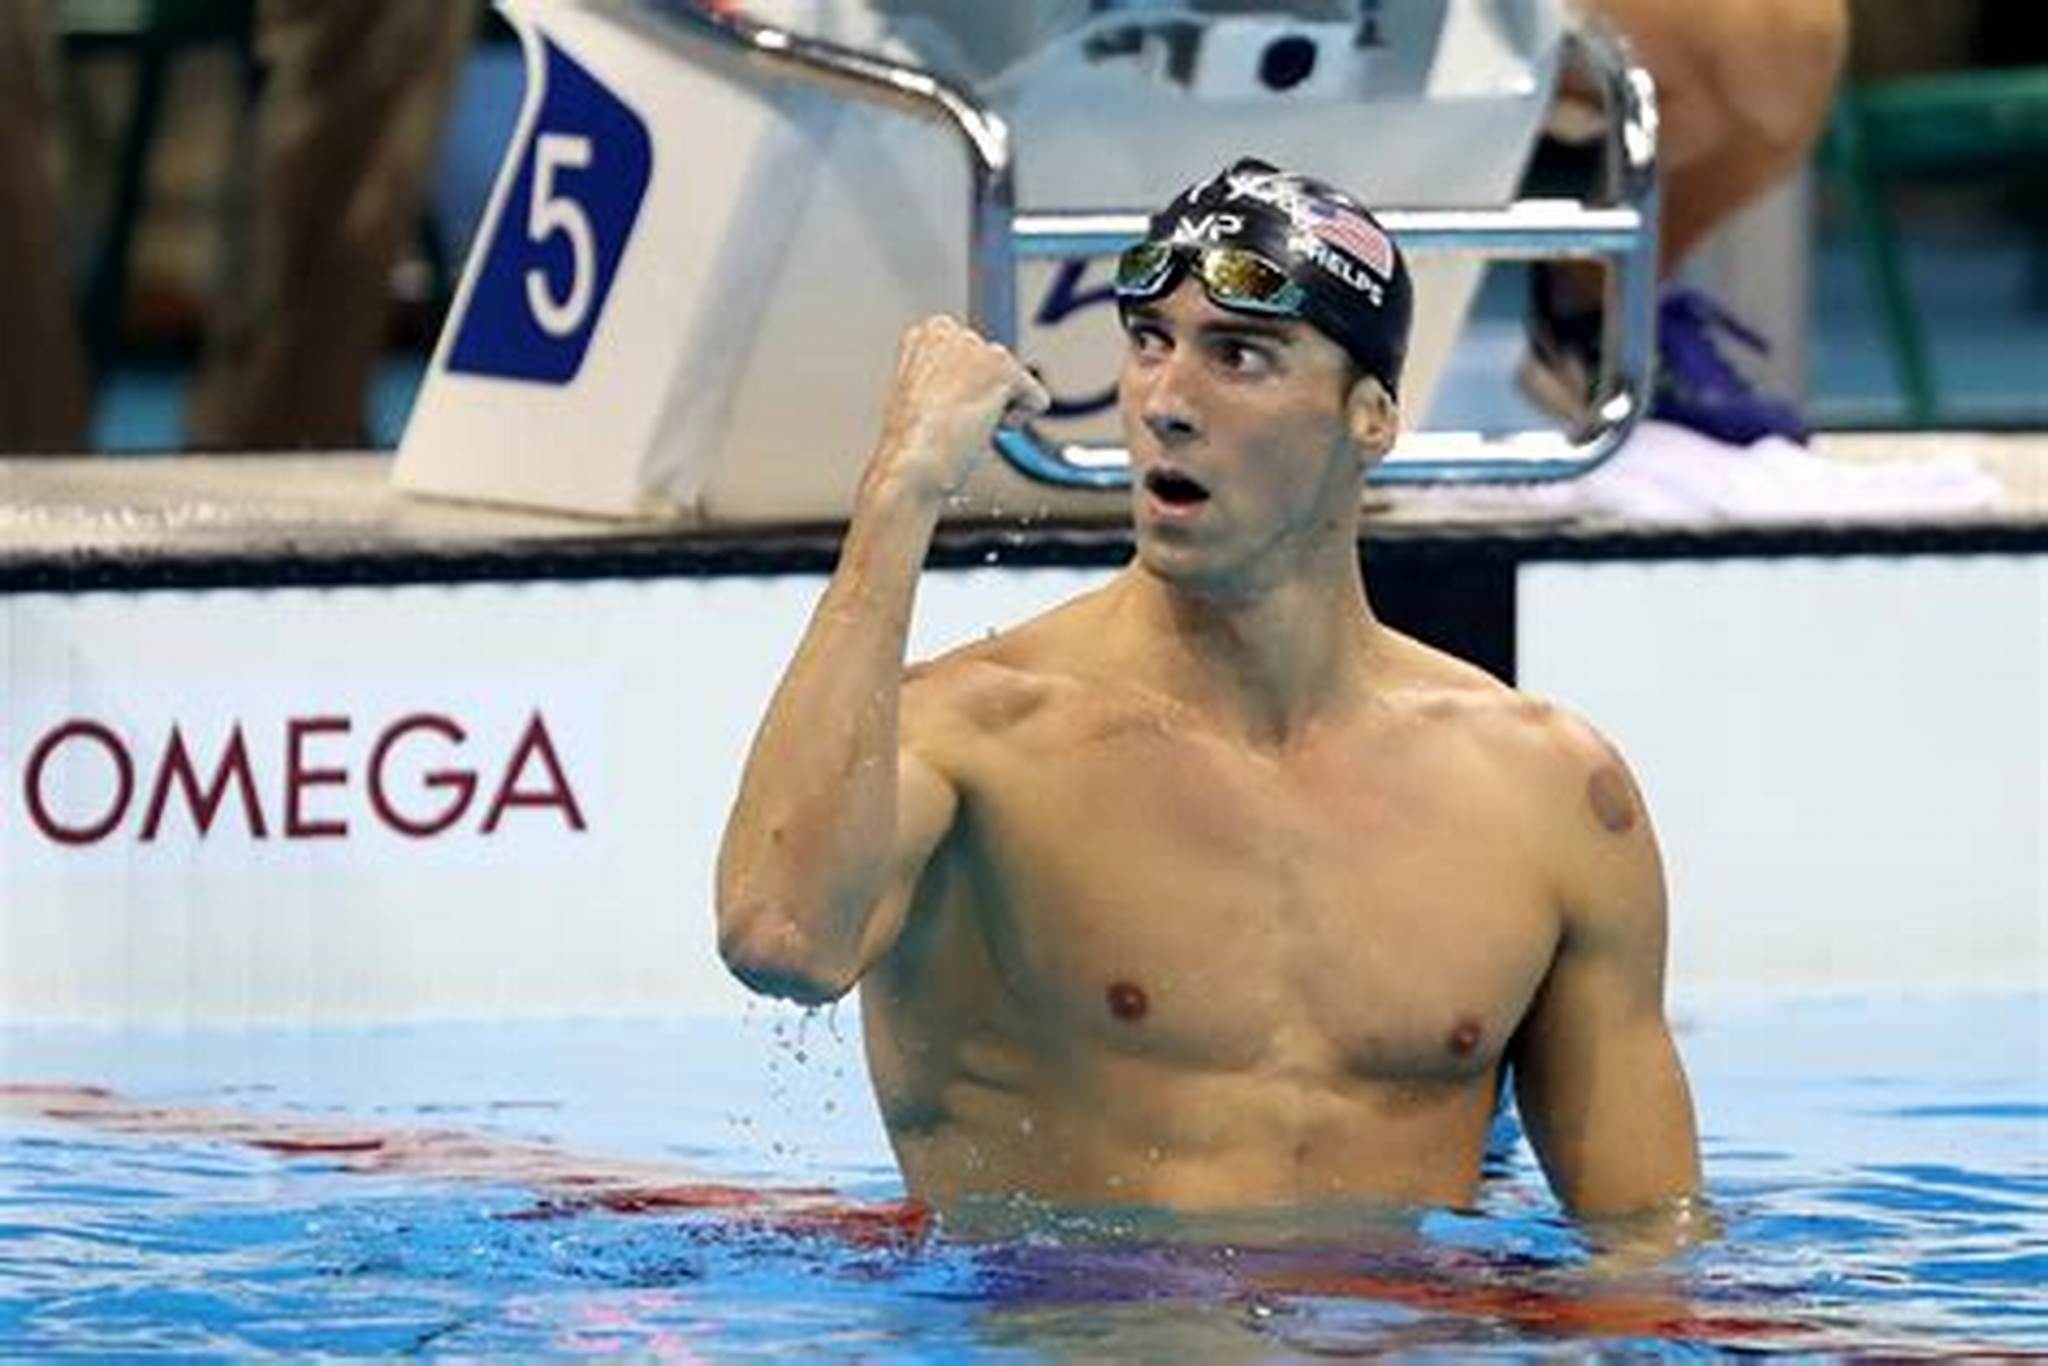 Michael Phelps Biography